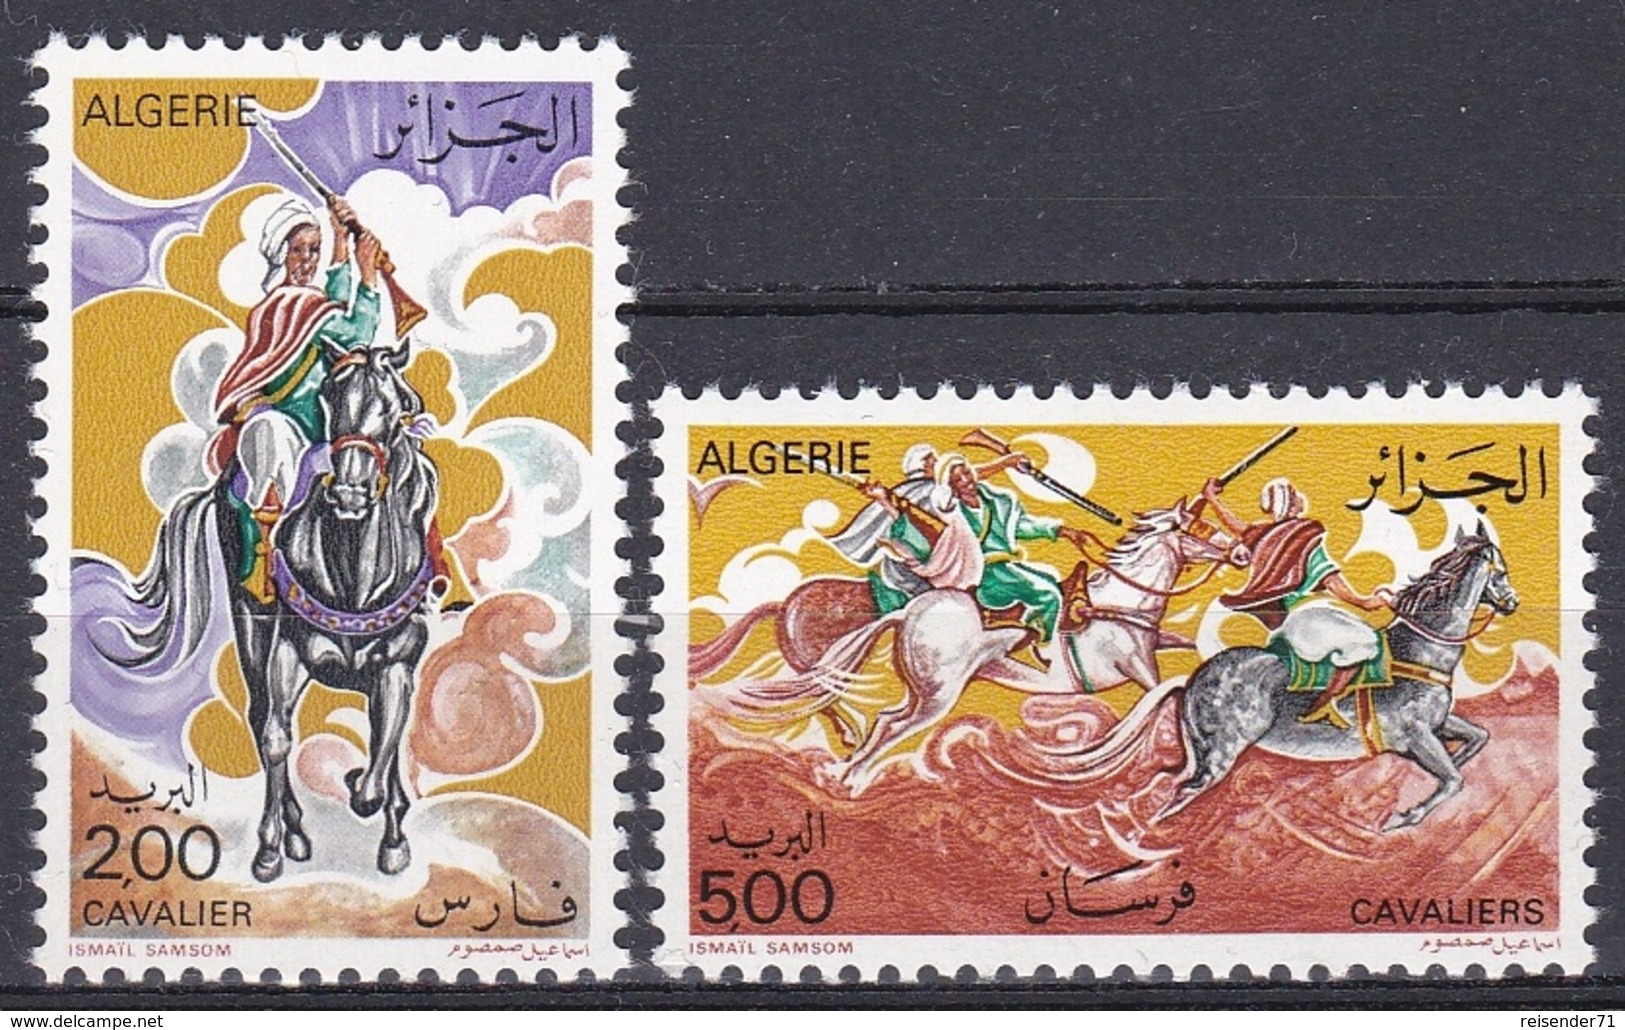 Algerien Algeria Algerie 1977 Militär Military Kavallerie Cavalry Reiter Trooper Pferde Horses Soldaten, Mi. 709-0 ** - Algerien (1962-...)